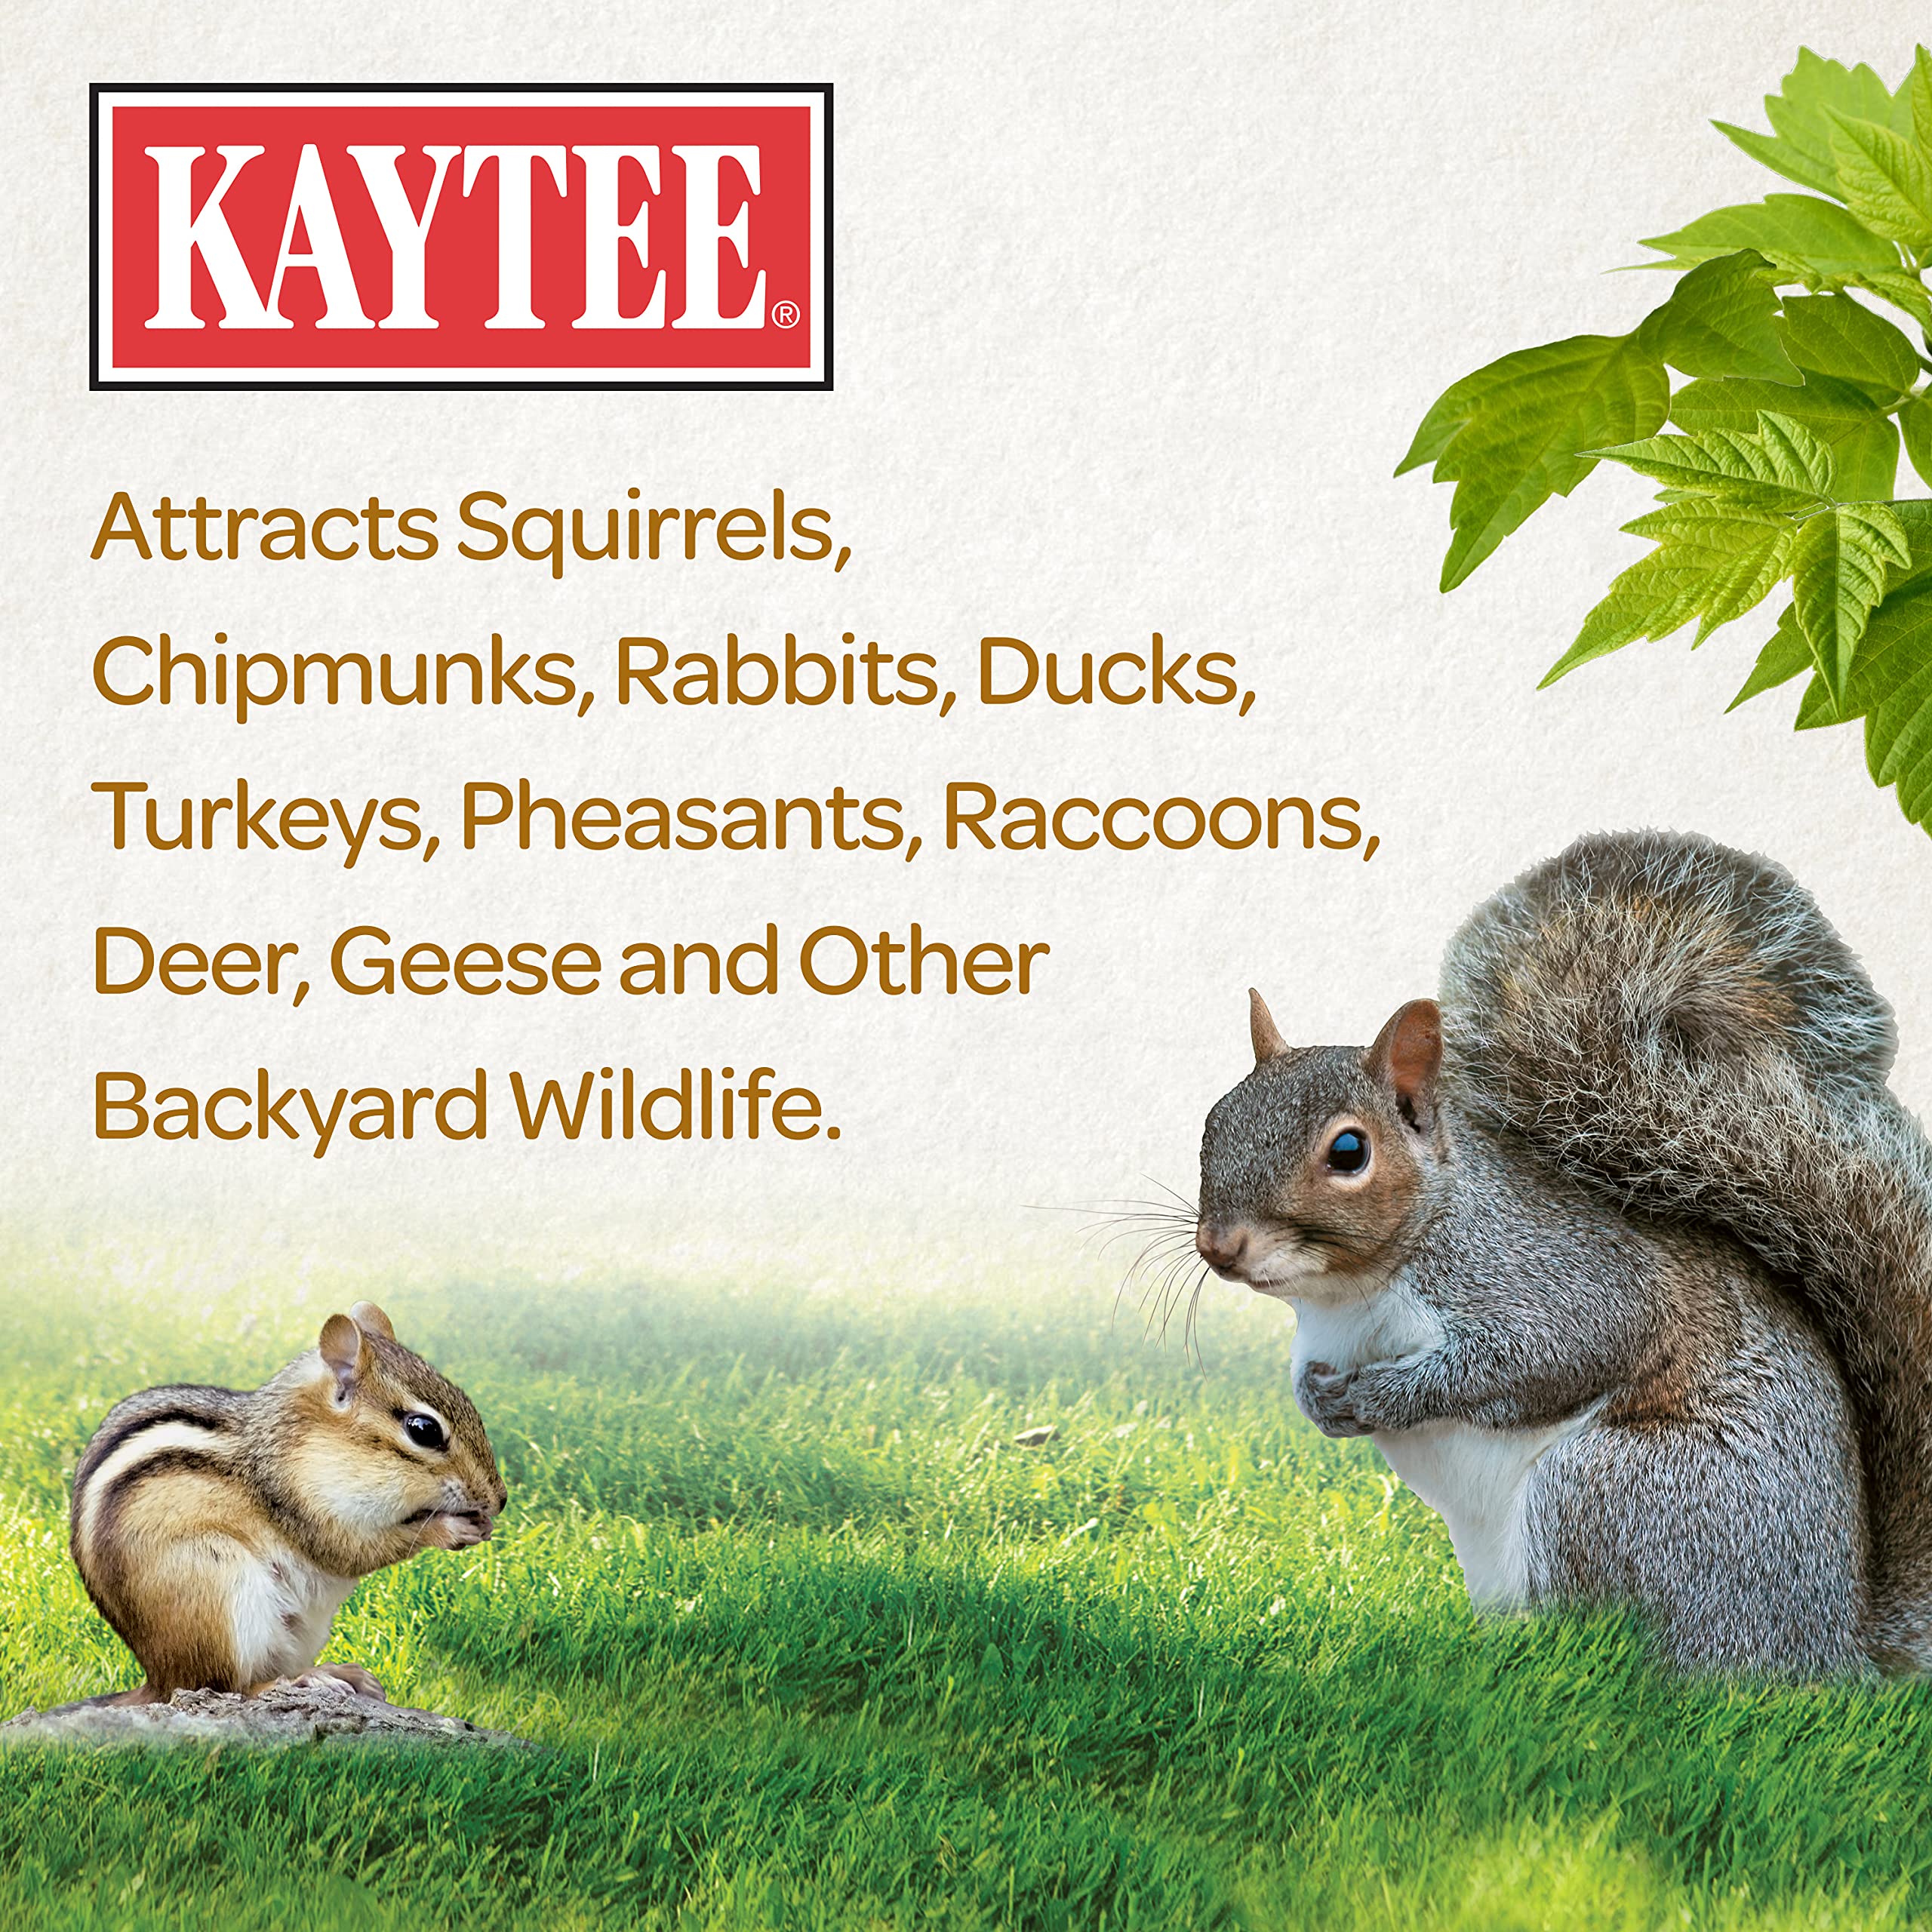 Kaytee Squirrel & Critter Food Blend For Squirrels, Chipmunks, Rabbits & Other Backyard Wildlife 10 Pound (Pack of 1)